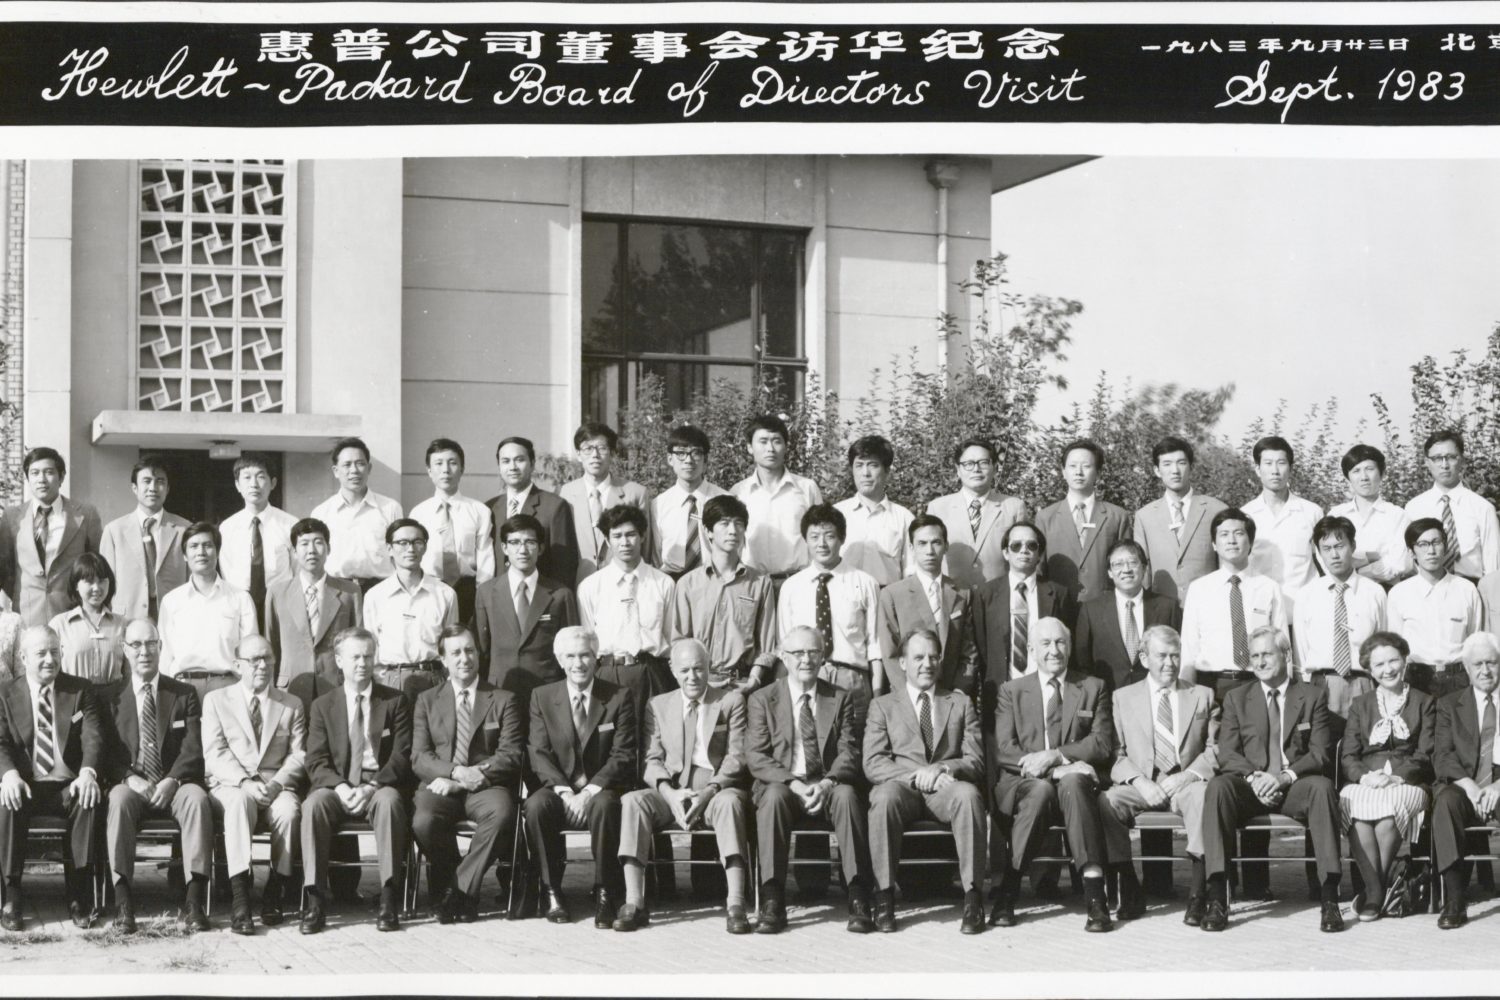 Group photo taken during the Hewlett-Packard Board of Directors' Visit to Beijing in 1963.